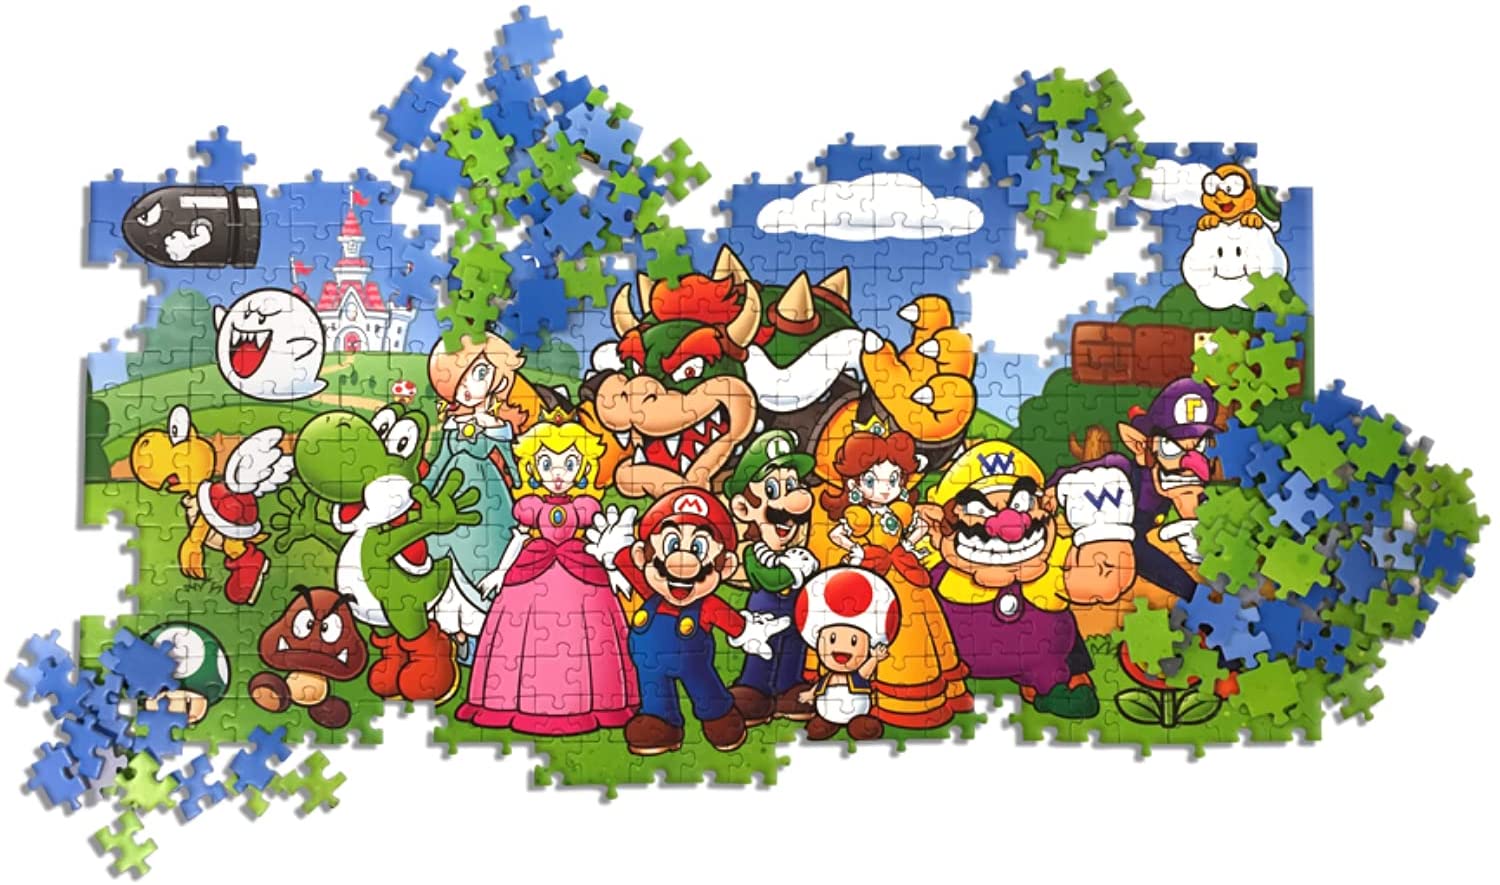 Puzzle Super Mario et ses amis 500 pièces Winning Moves : King